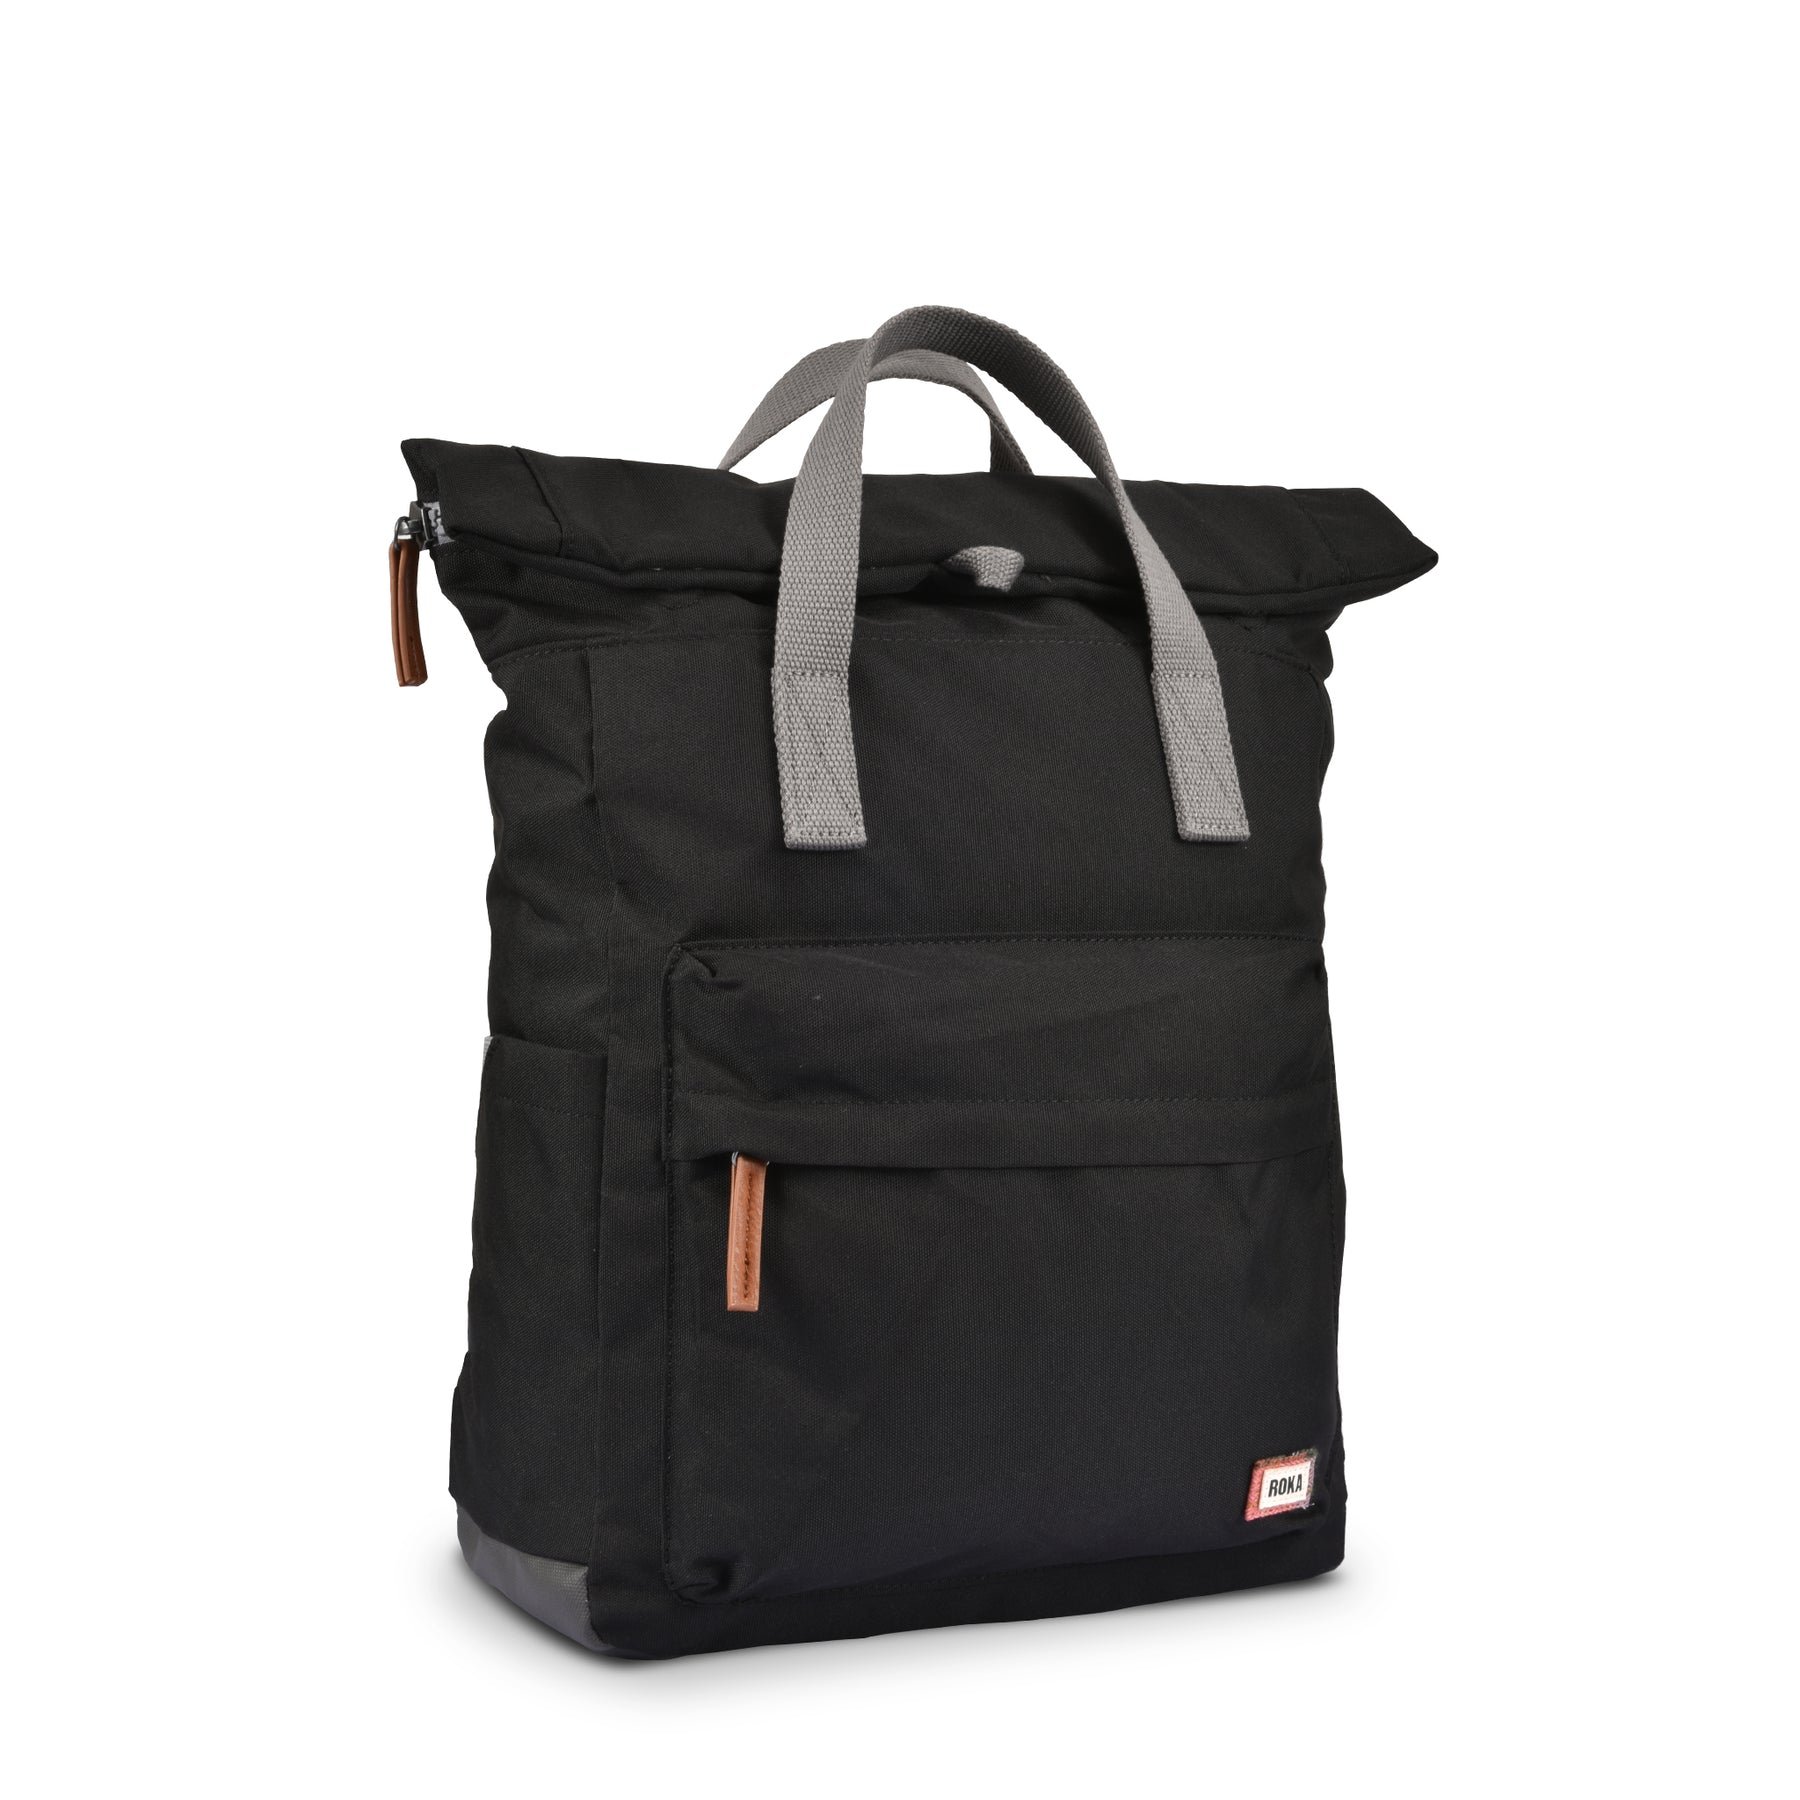 Bags — Brocante Ltd